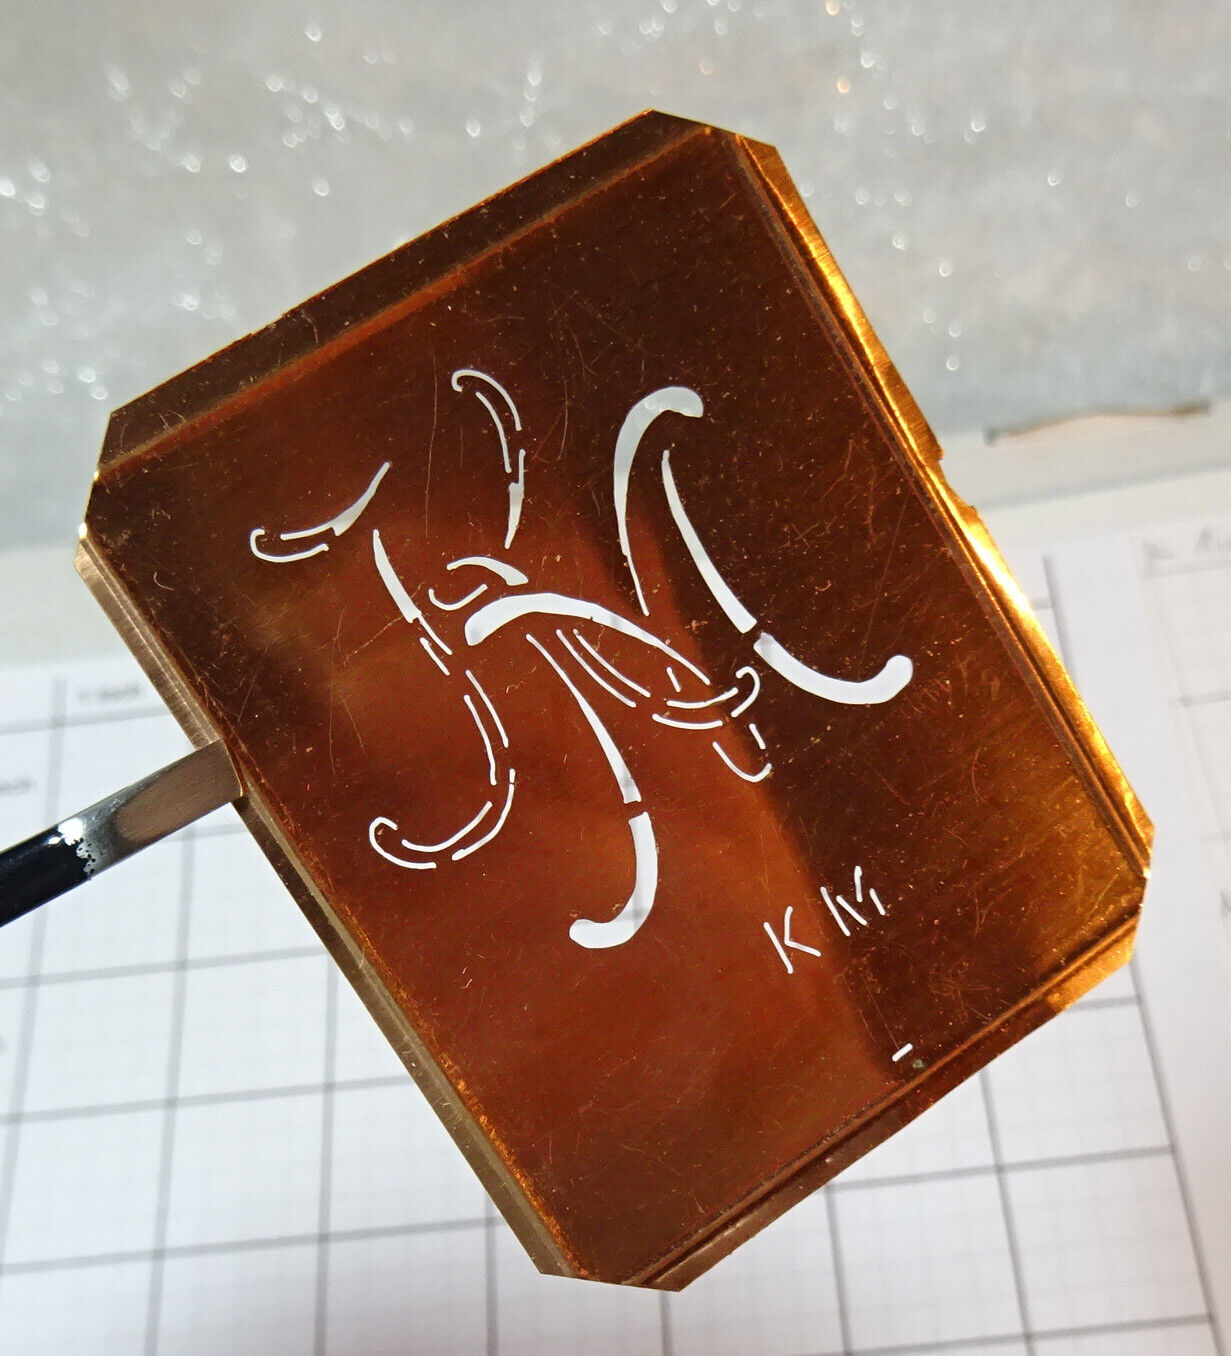 KM K M MK monogram initials letter antique copper stencil VTG family genealogy